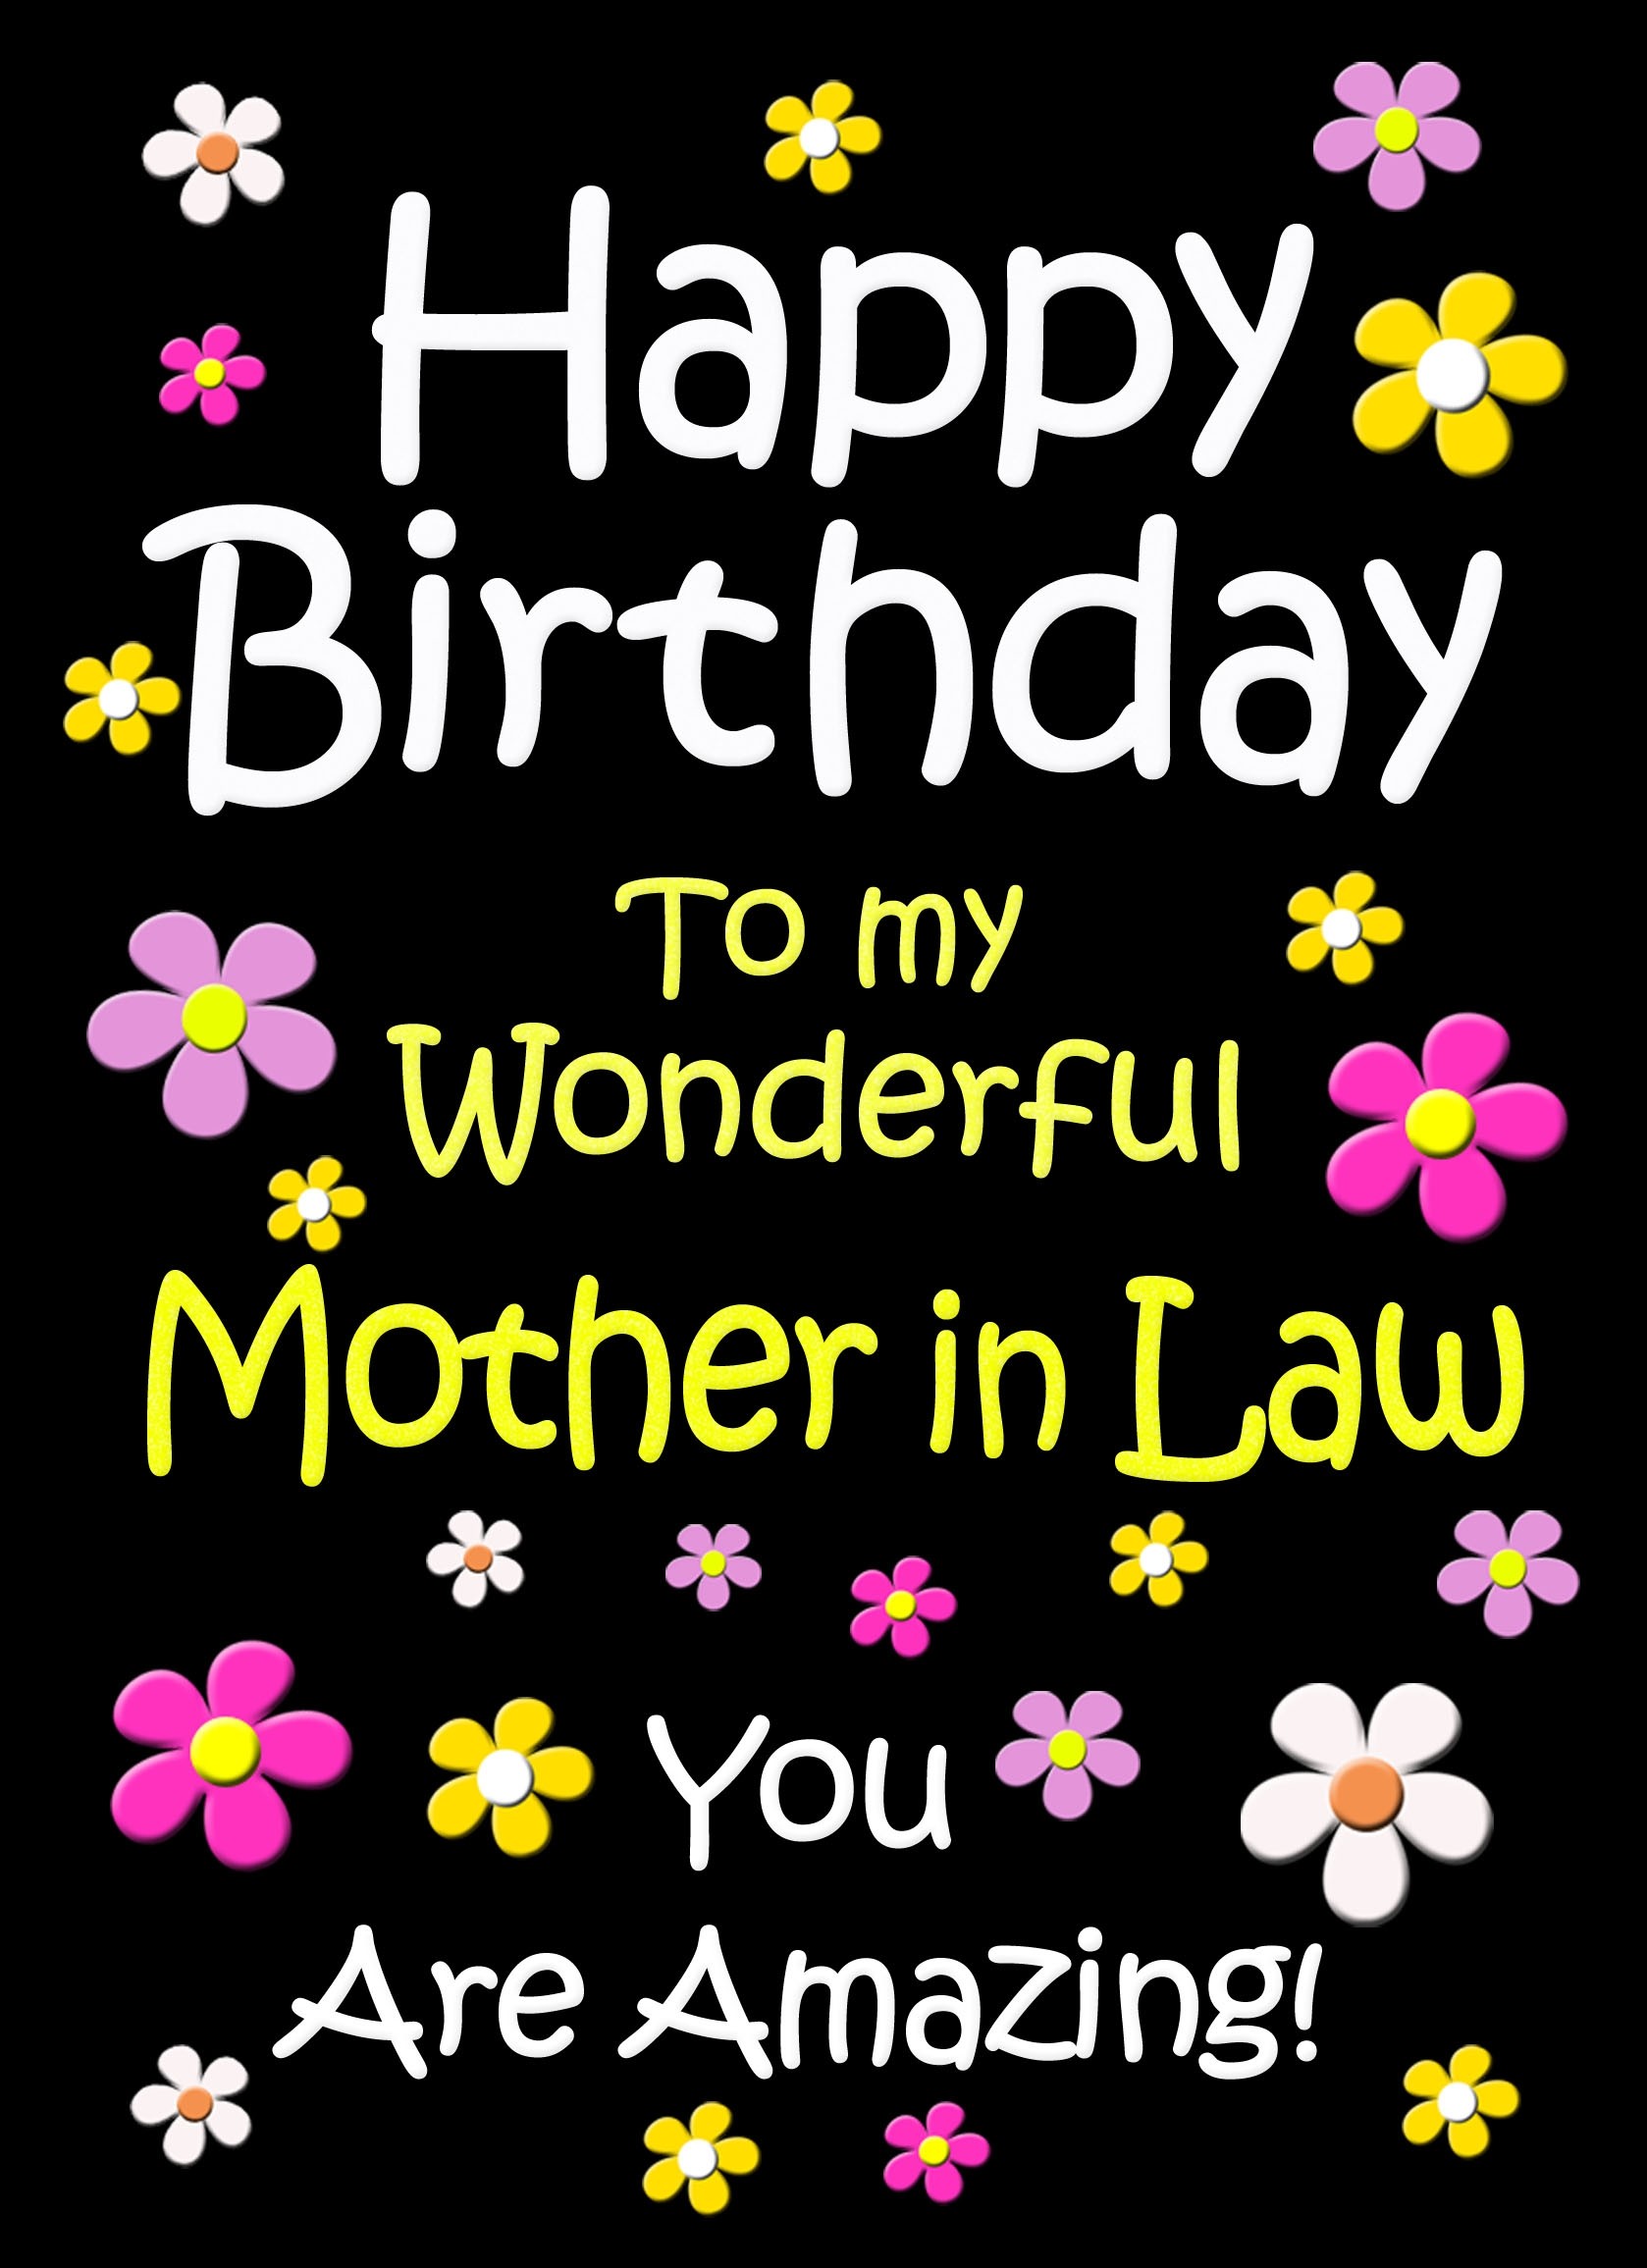 Mother in Law Birthday Card (Black)